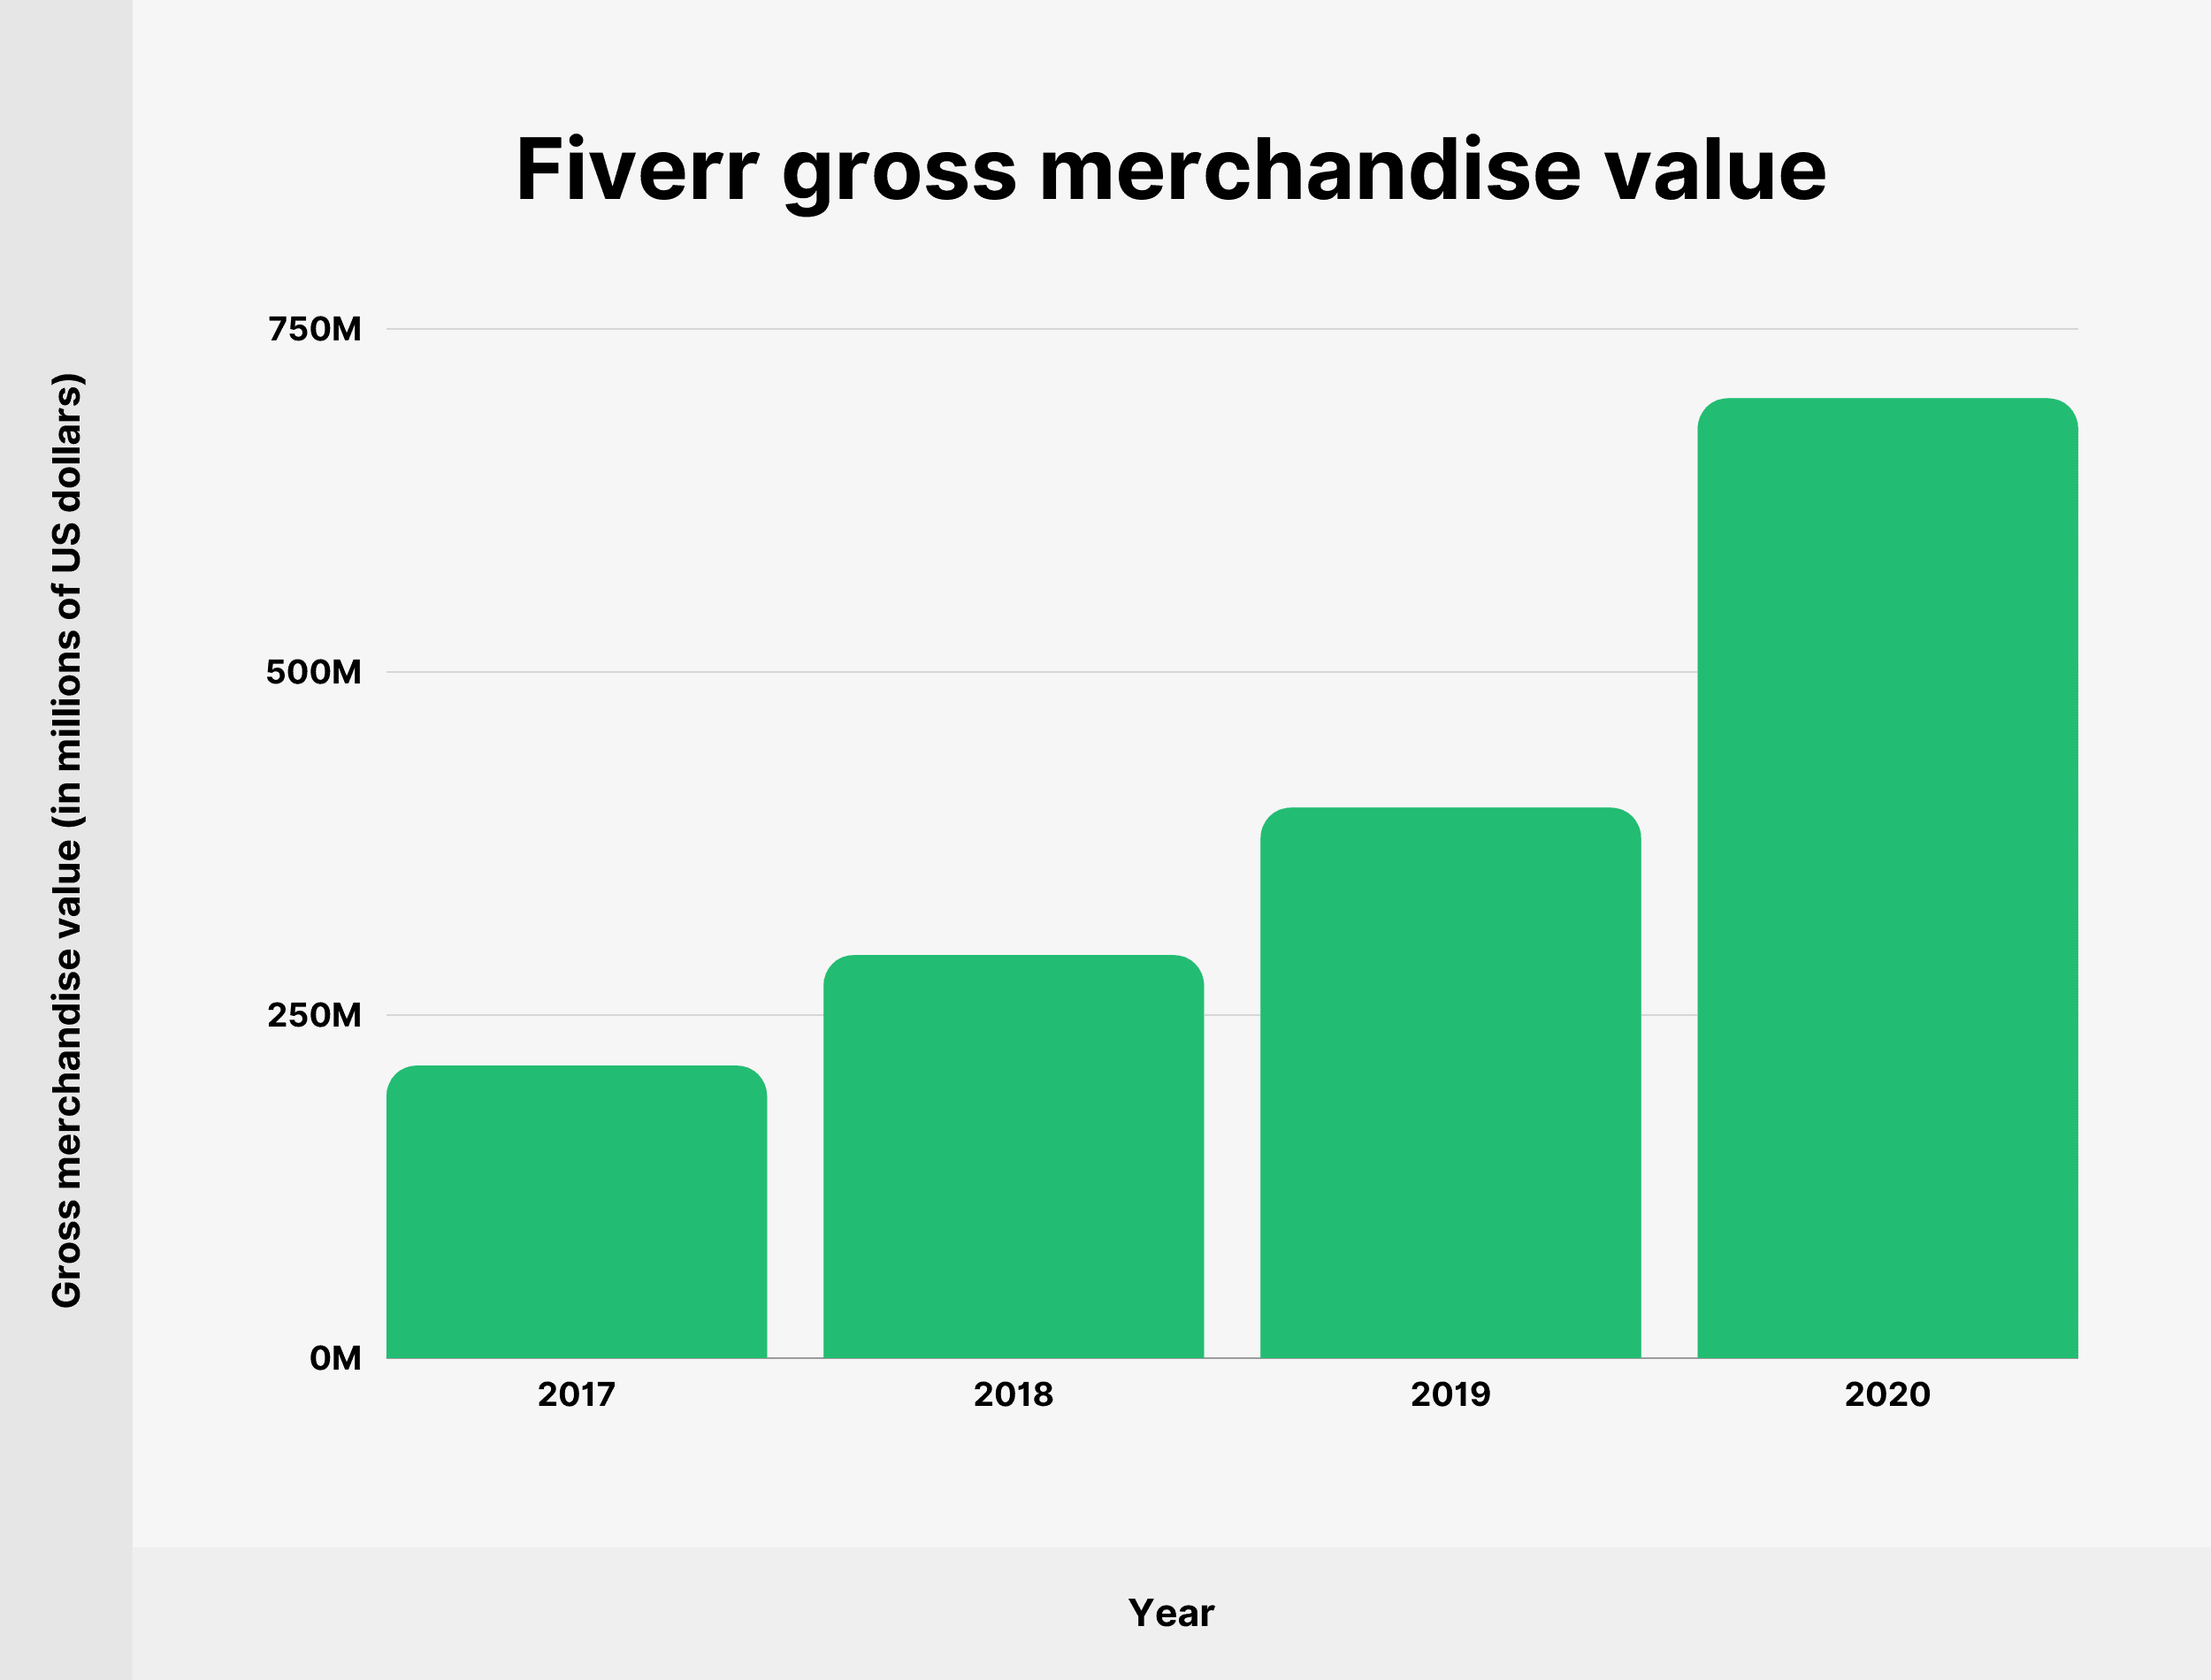 Fiverr gross merchandise value